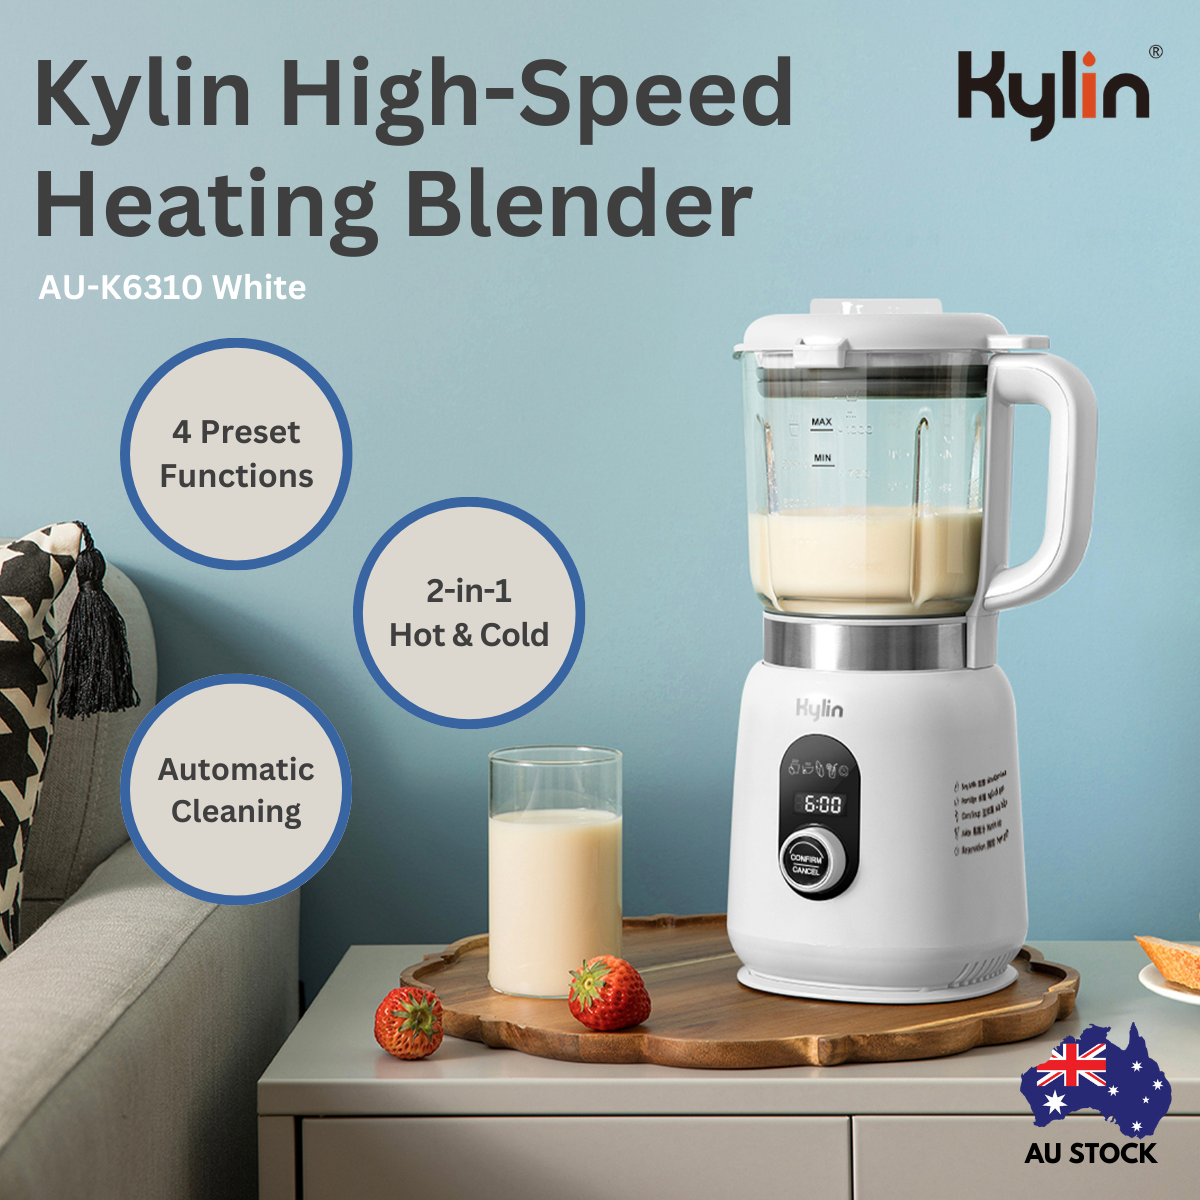 Kylin High-Speed Heating Blender 1L AU-K6310